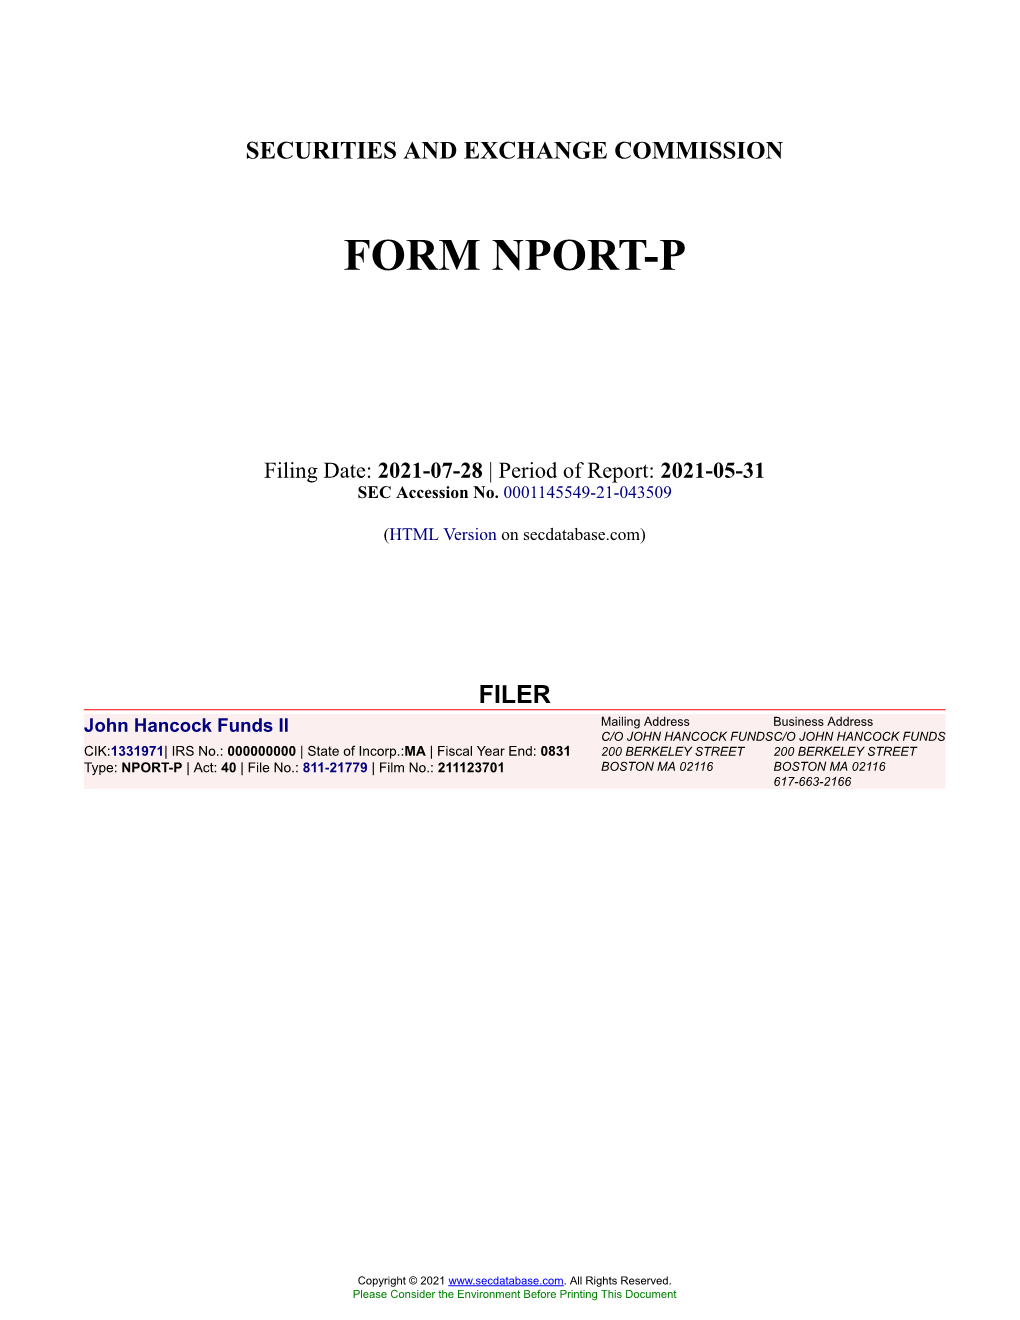 John Hancock Funds II Form NPORT-P Filed 2021